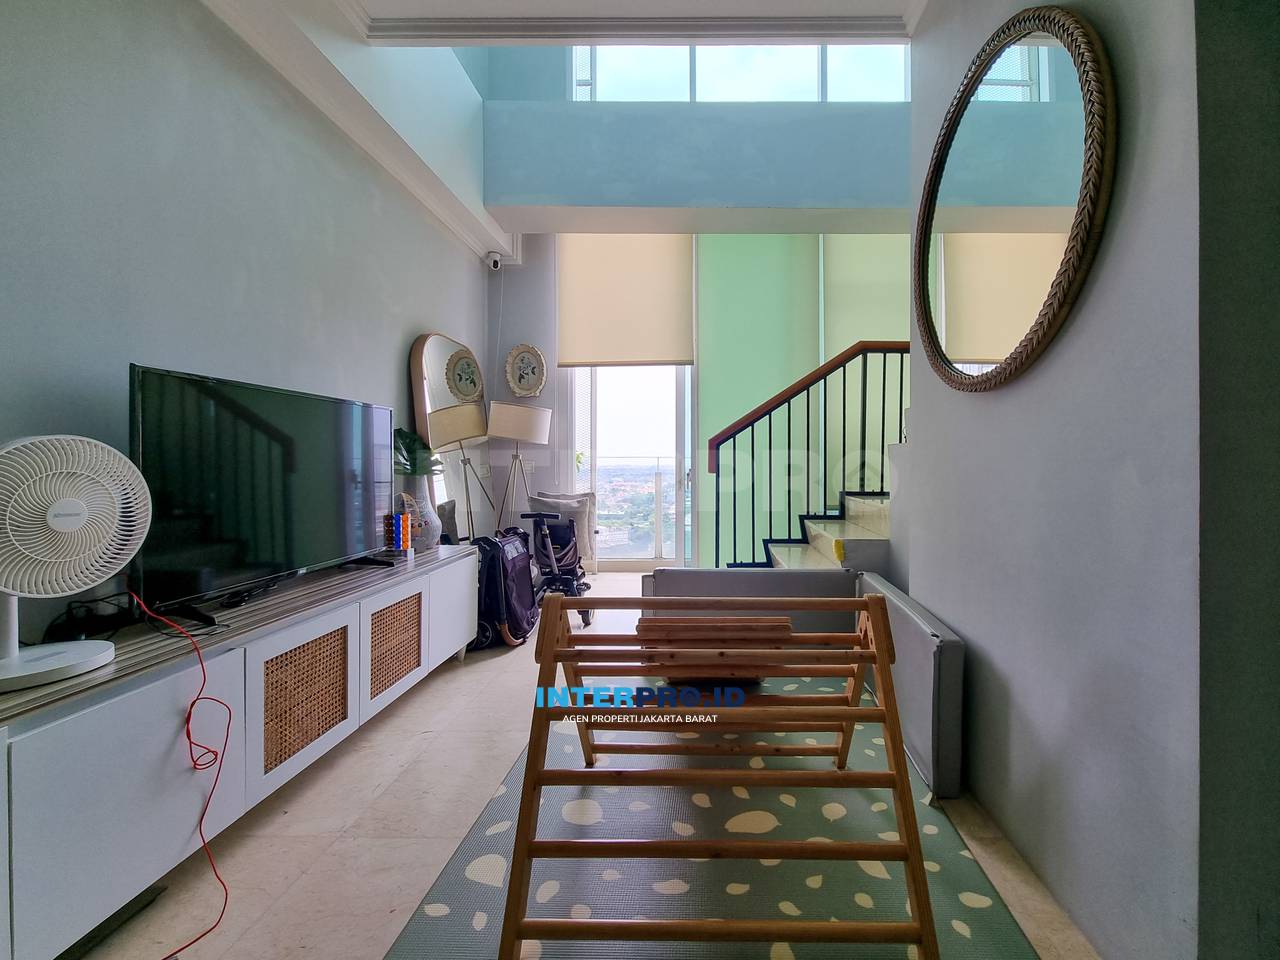 Apartemen Mewah Satu8 Residence Kedoya - Luas 105m2 - 2Bedroom - Semi Furnished